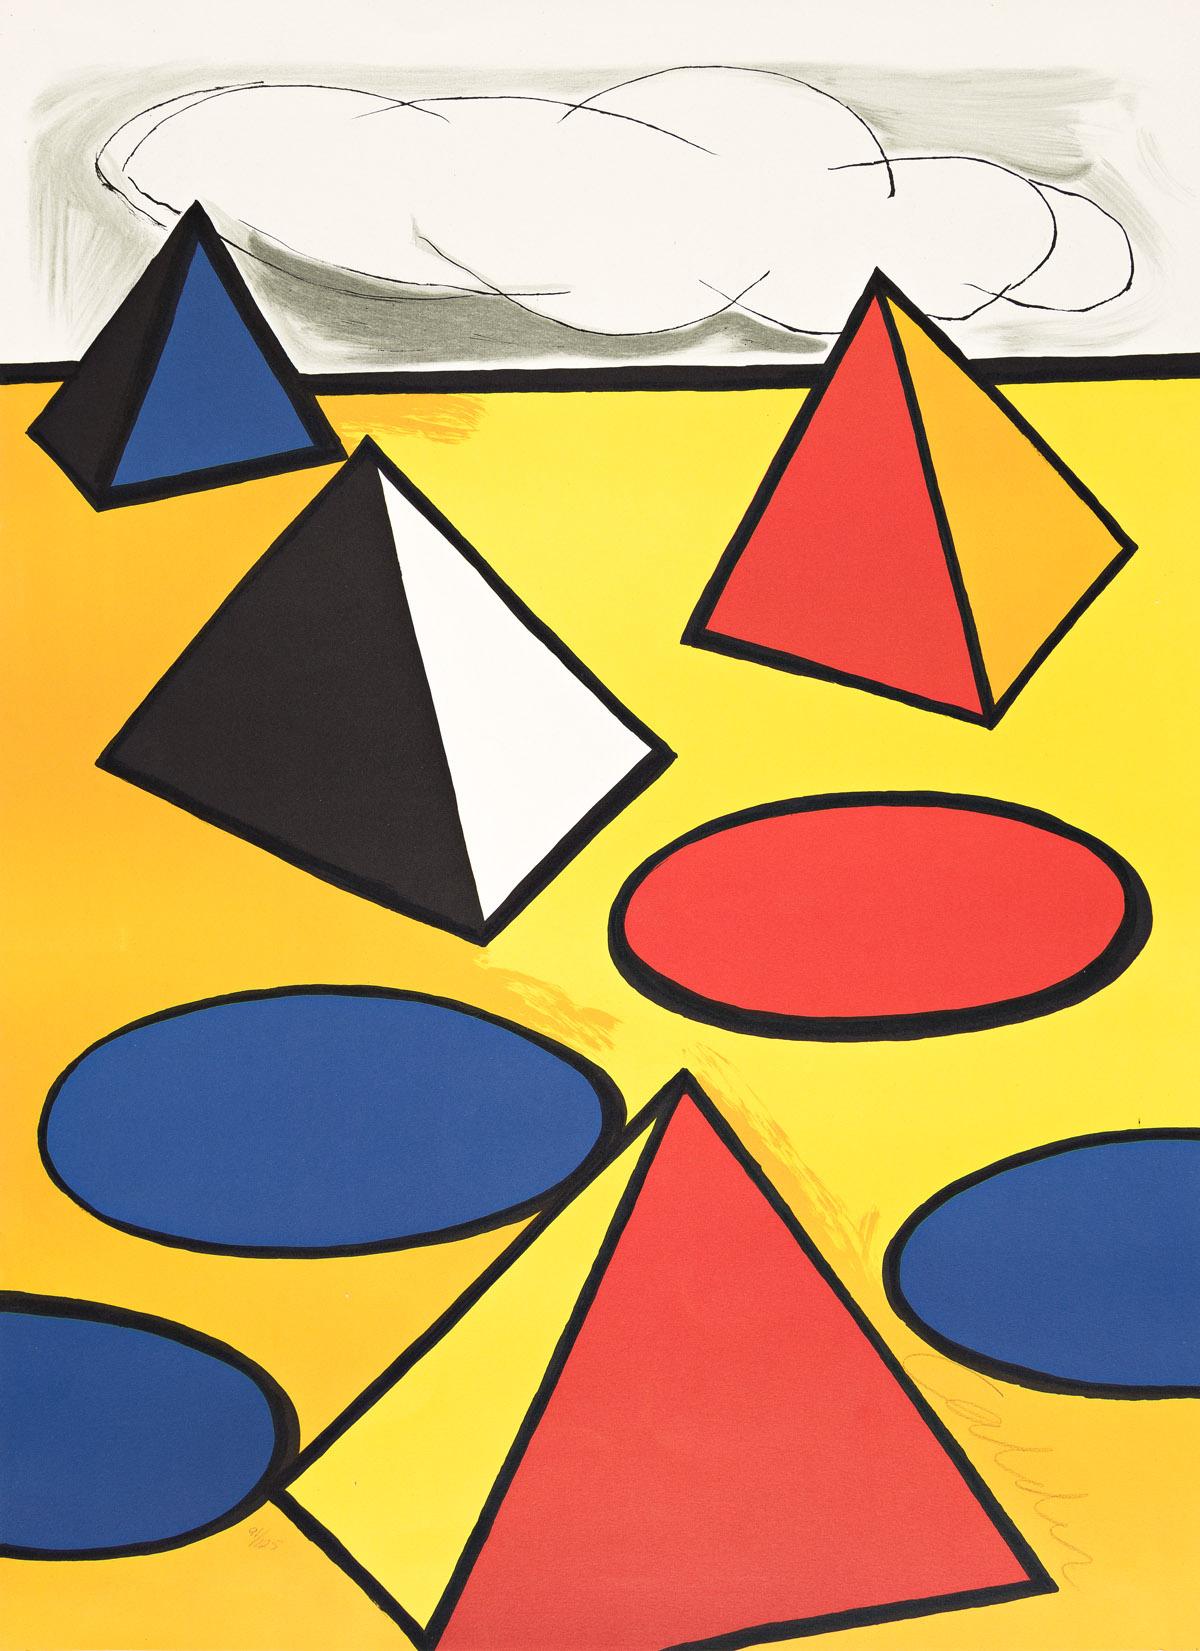 Alexander Calder Pyramids lithograph 1975 (Calder prints)